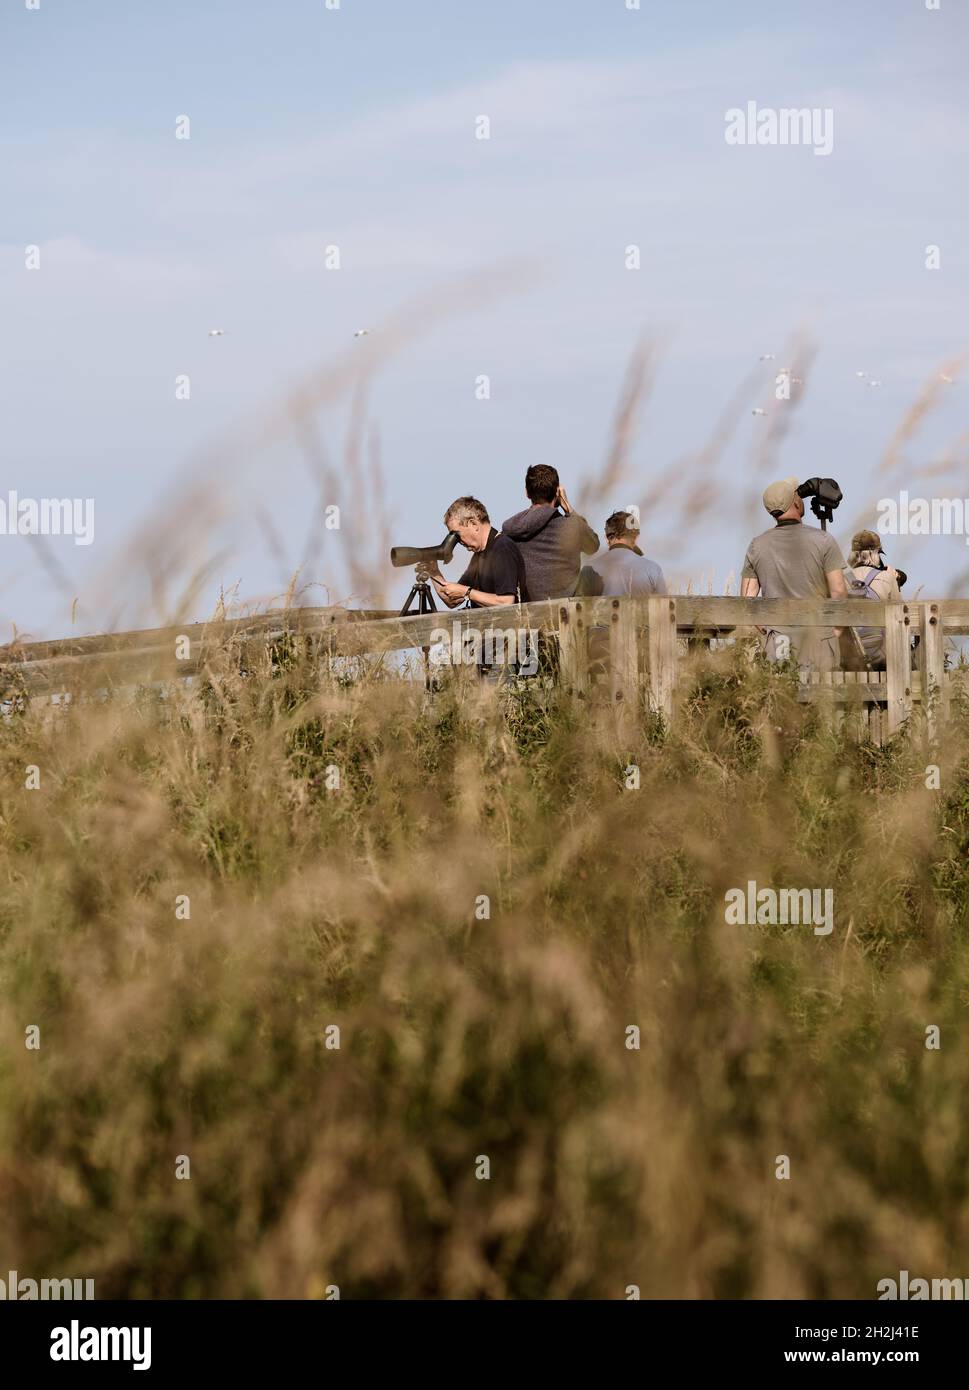 Ornithologsits - Birdwatchers - Birdwatching - Birdspotting - Twitchers - Birdspotters with telescopes and binoculars gathered in long grass landscape Stock Photo